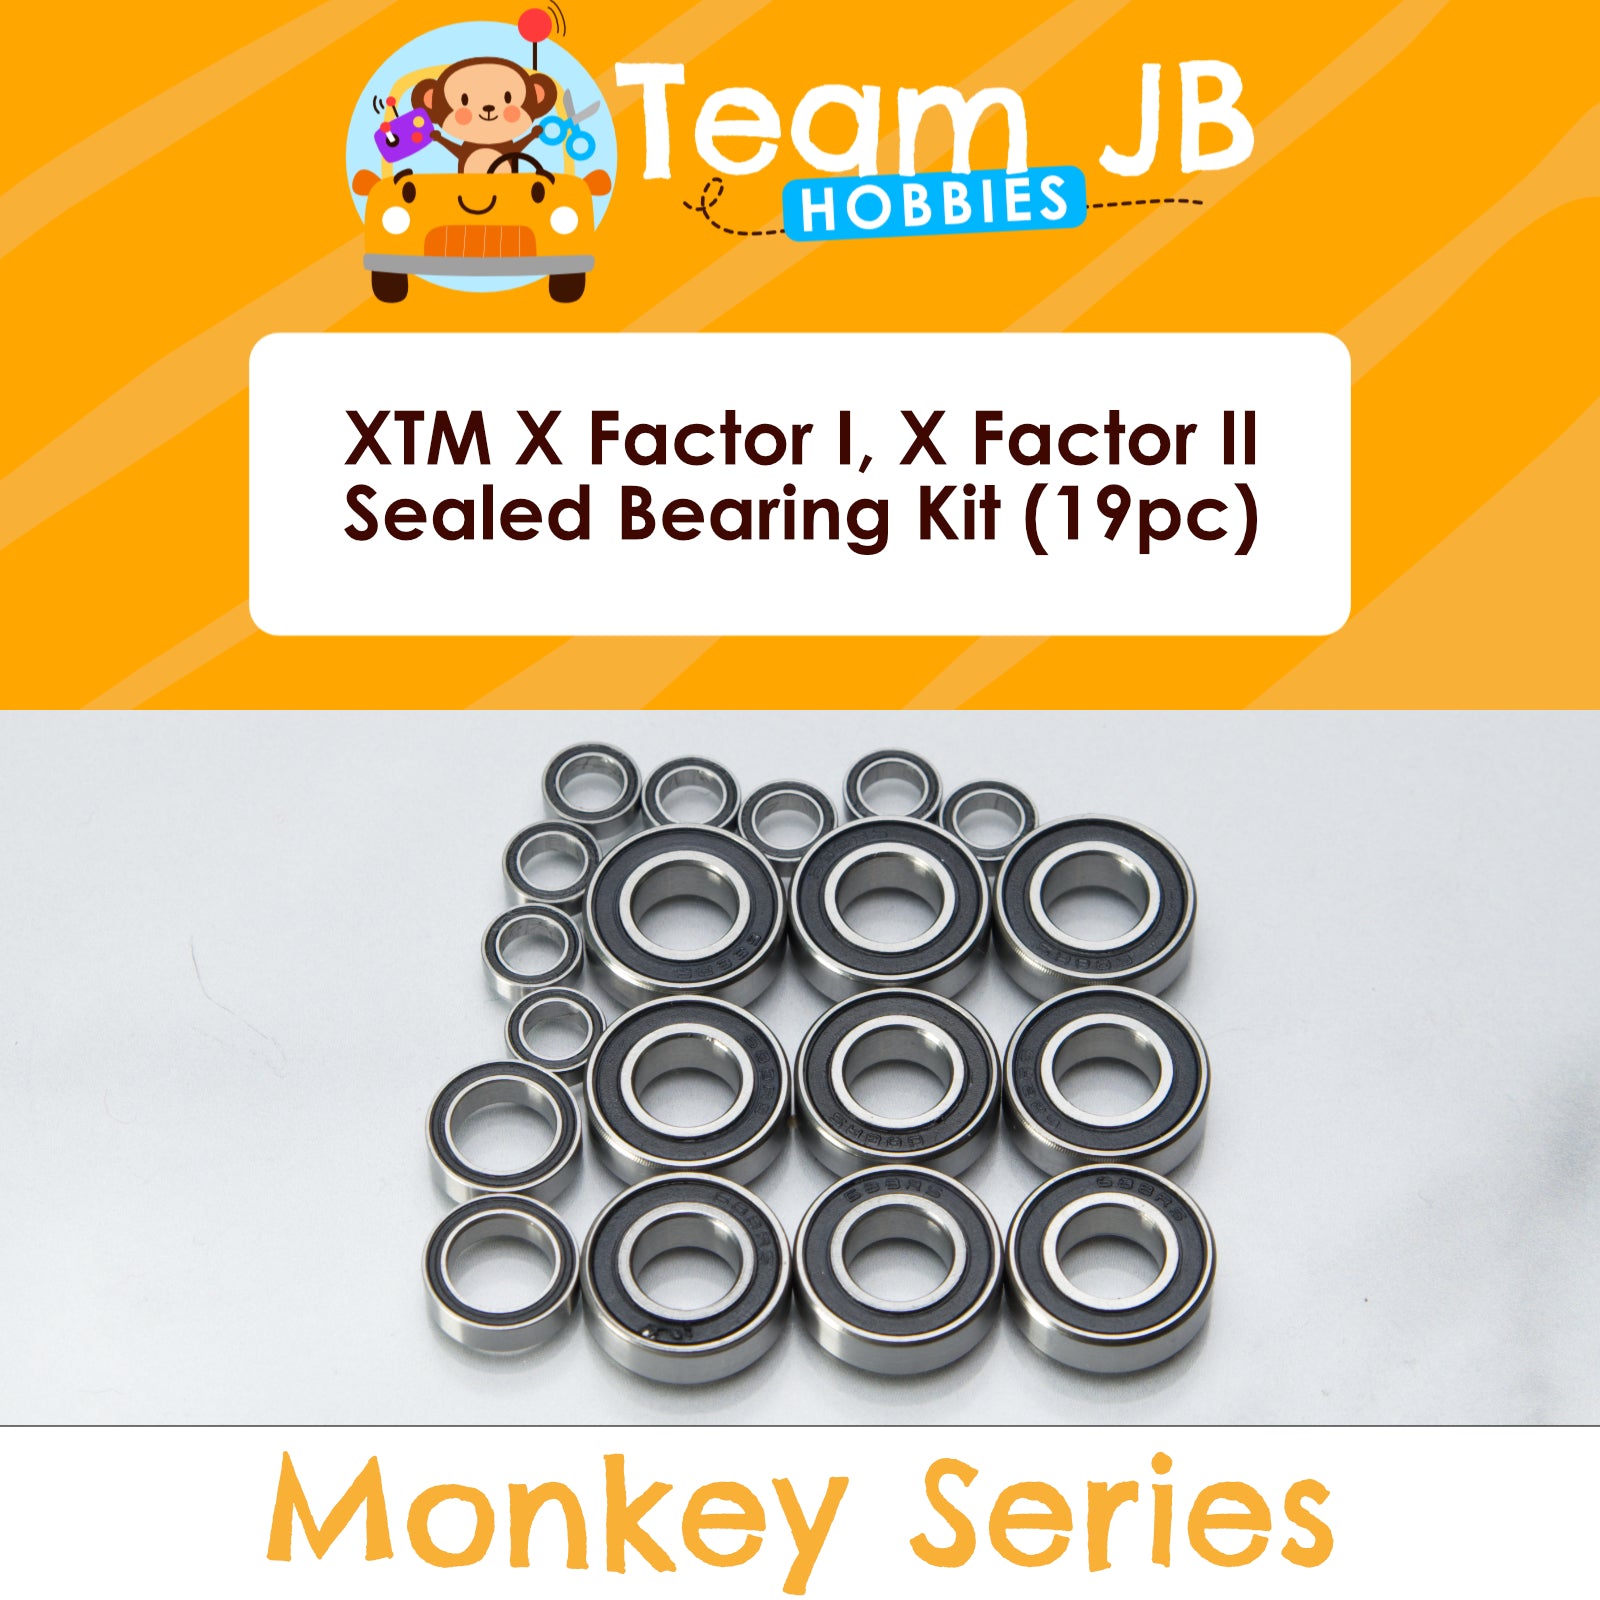 XTM X Factor I, X Factor II - Sealed Bearing Kit